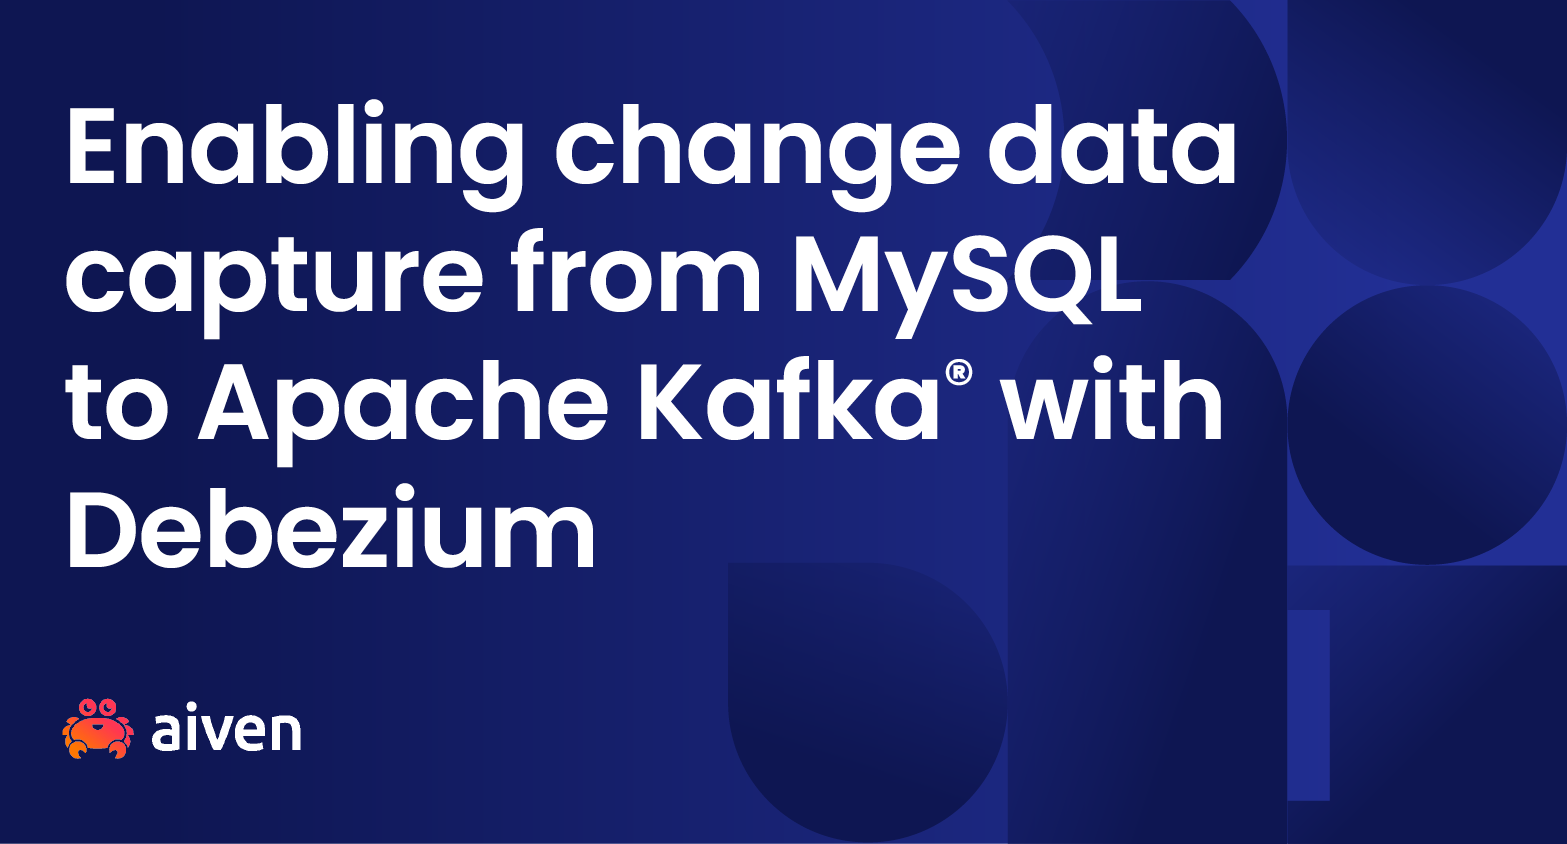 Enabling change data capture from MySQL to Apache Kafka® with Debezium illustration